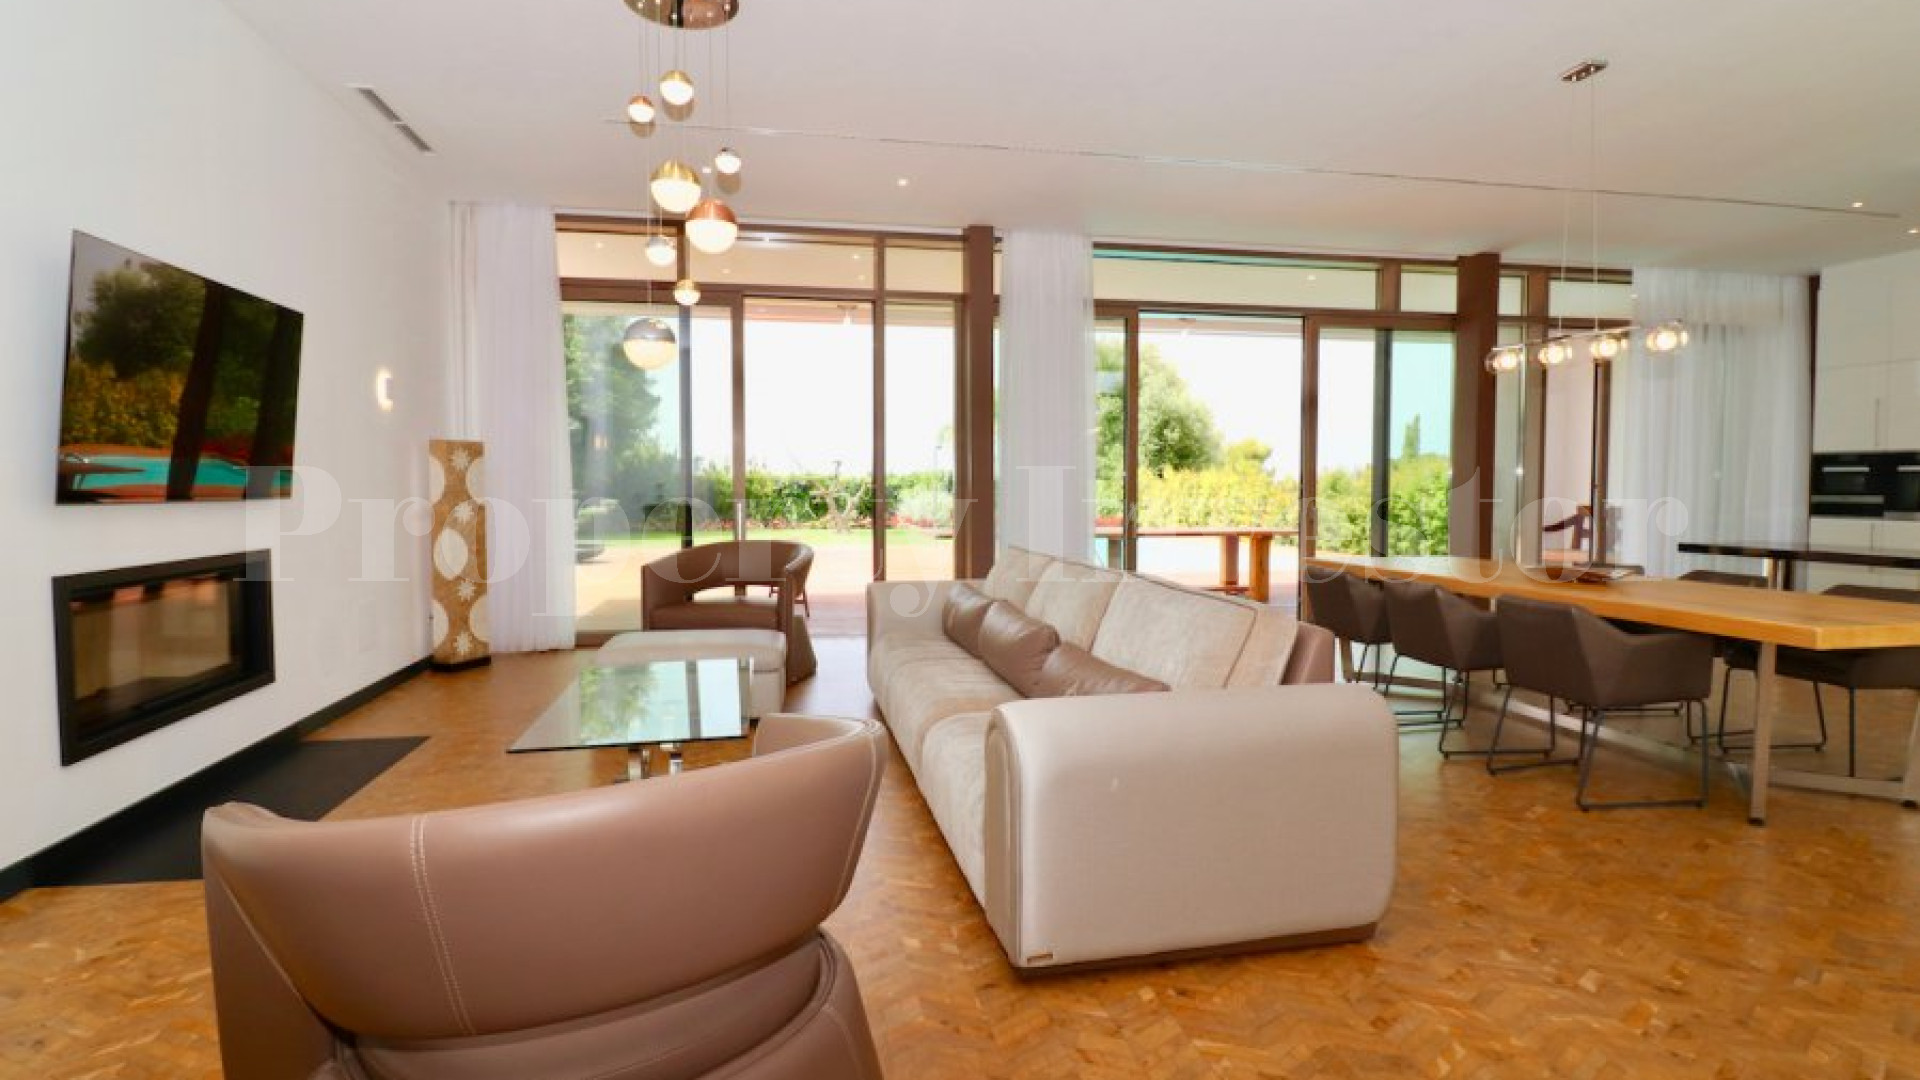 6 Bedroom Designer Villa with Amazing Garden, Pool & Rooftop Terrace in Nueva Andalucia, Marbella